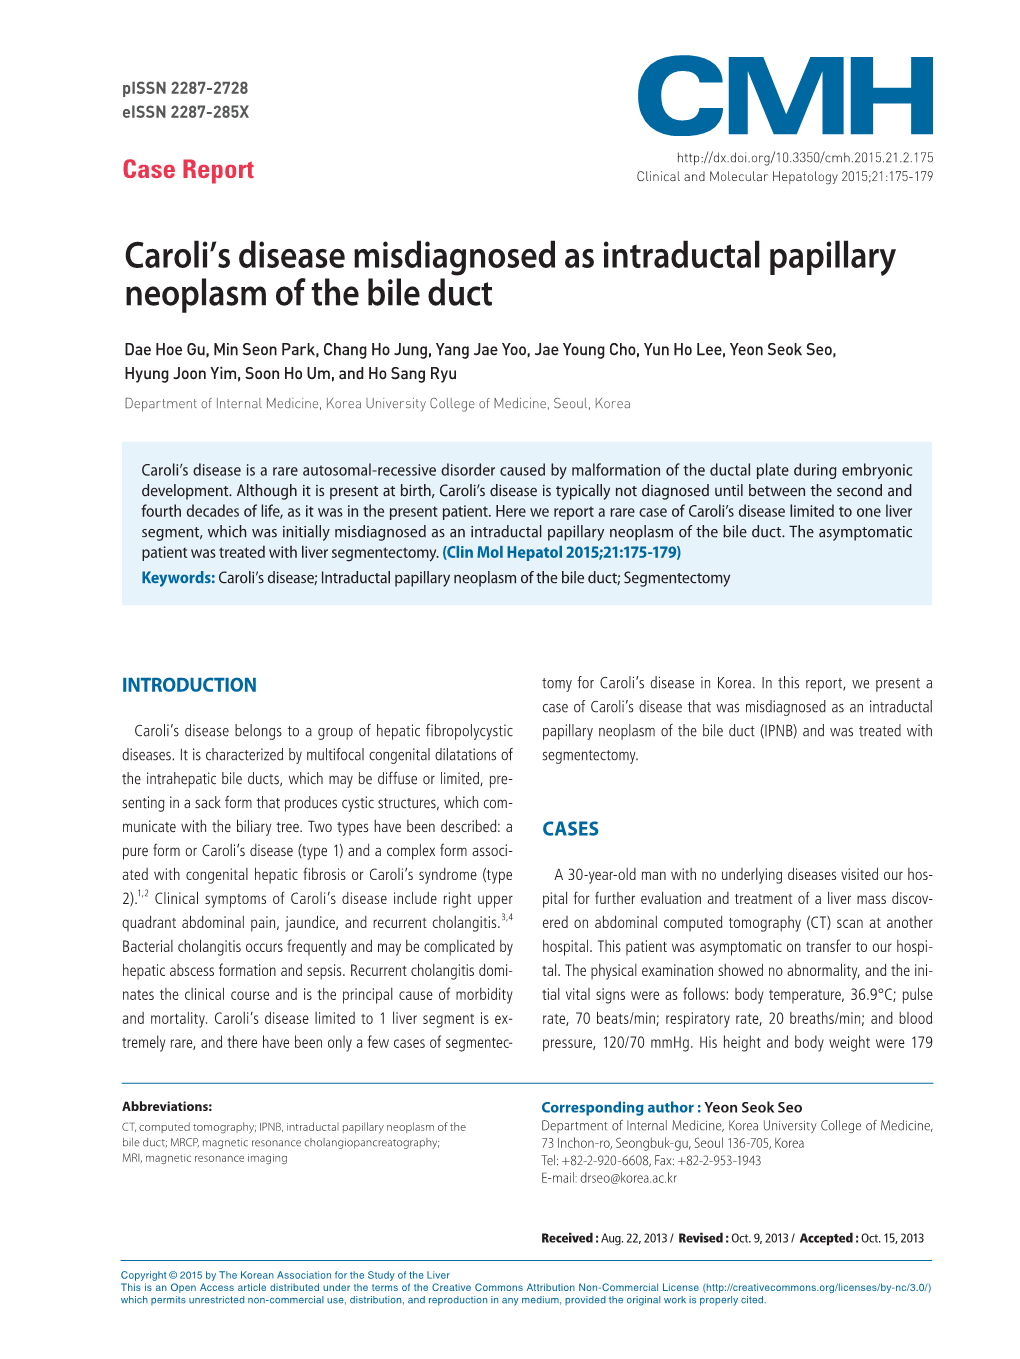 Caroli's Disease Misdiagnosed As Intraductal Papillary Neoplasm Of